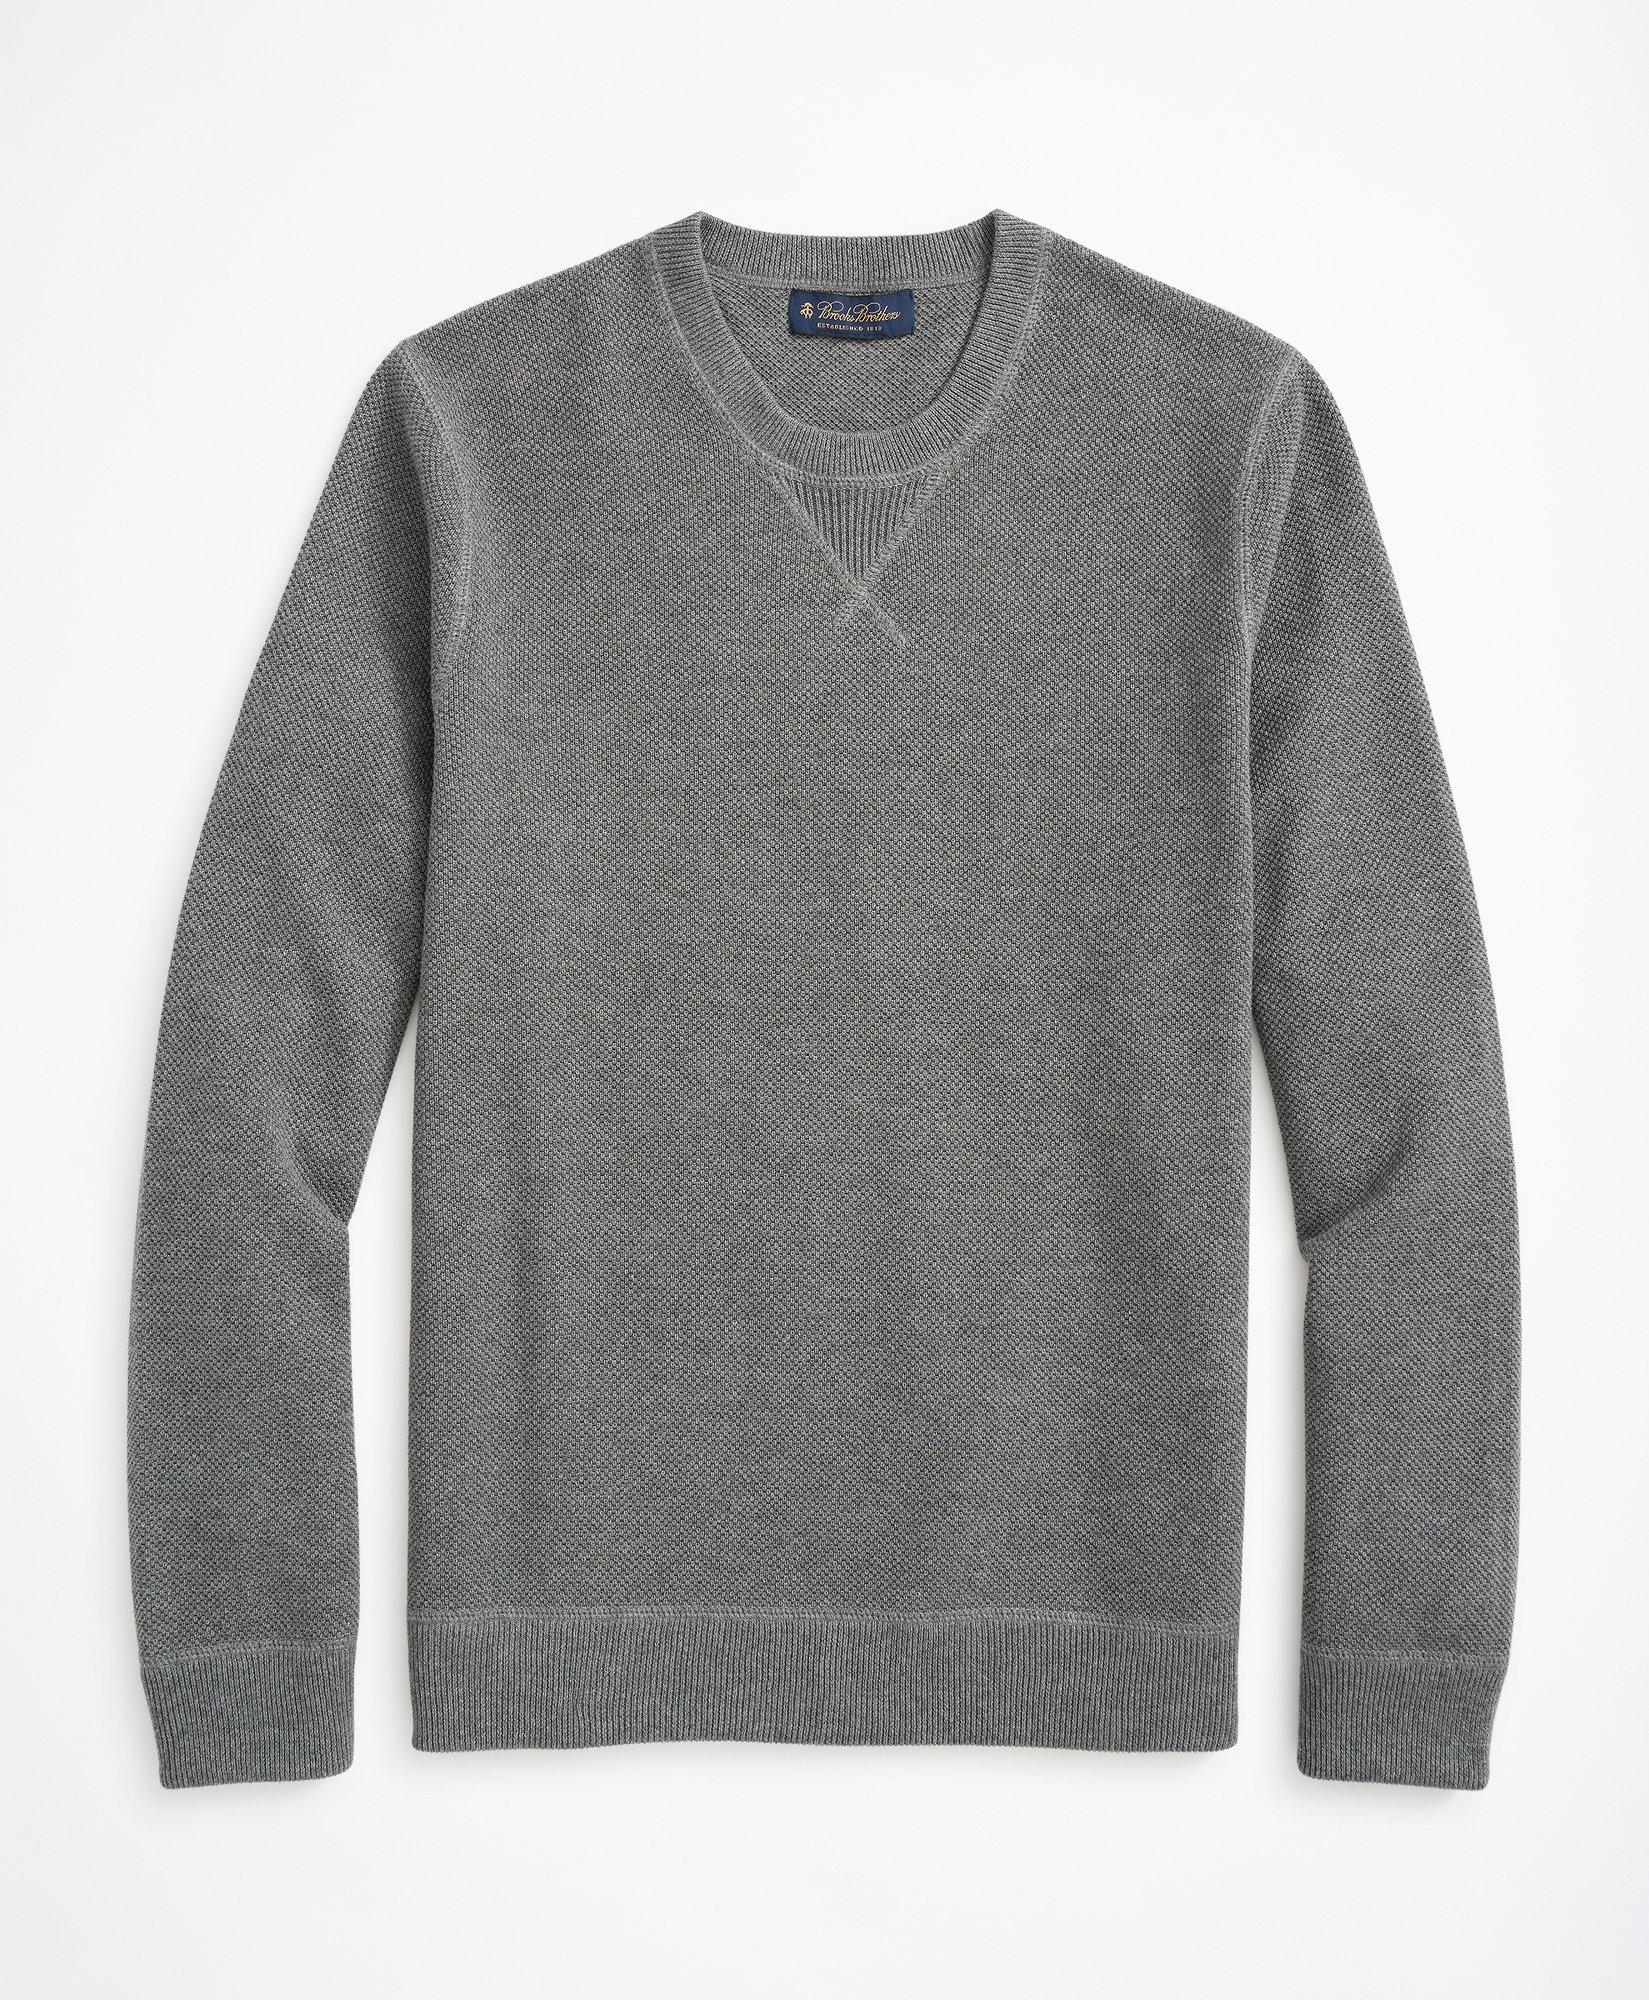 Sweater Crewneck Cotton Pique